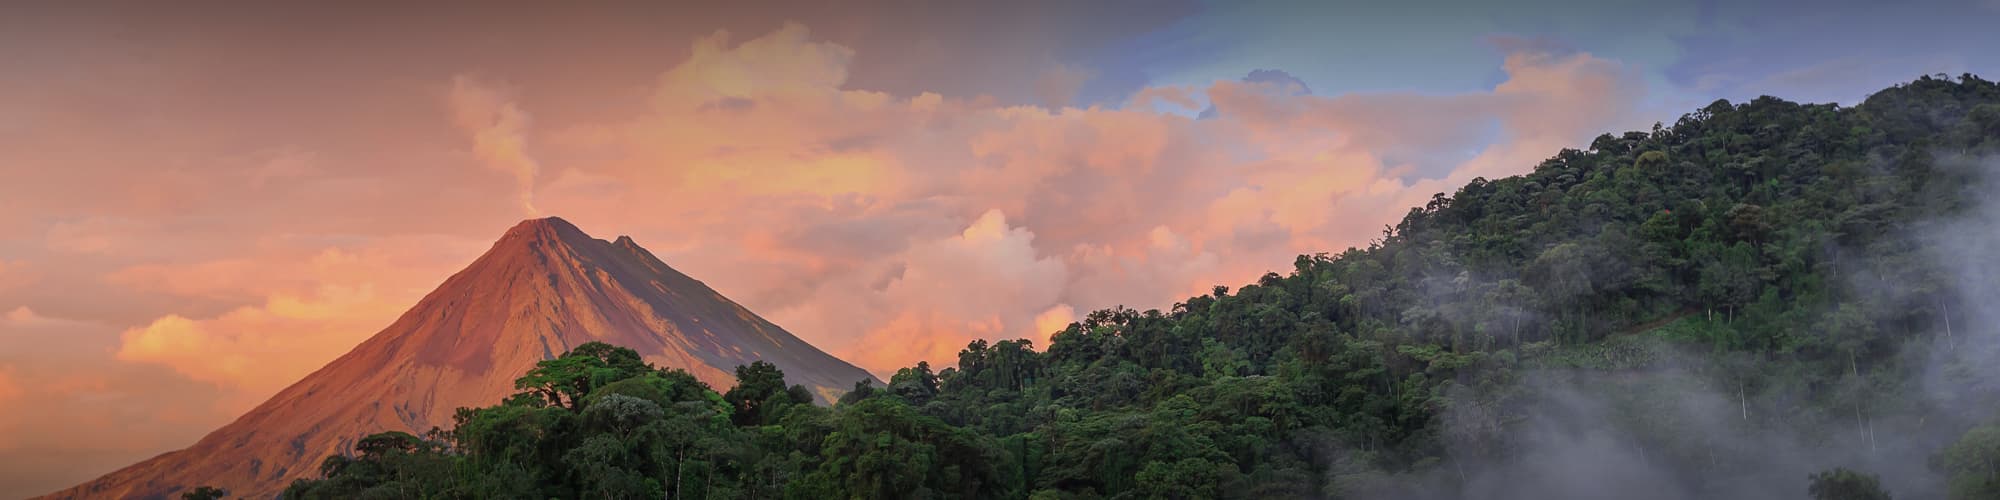 Autotour Costa Rica © photodiscoveries / Adobe Stock